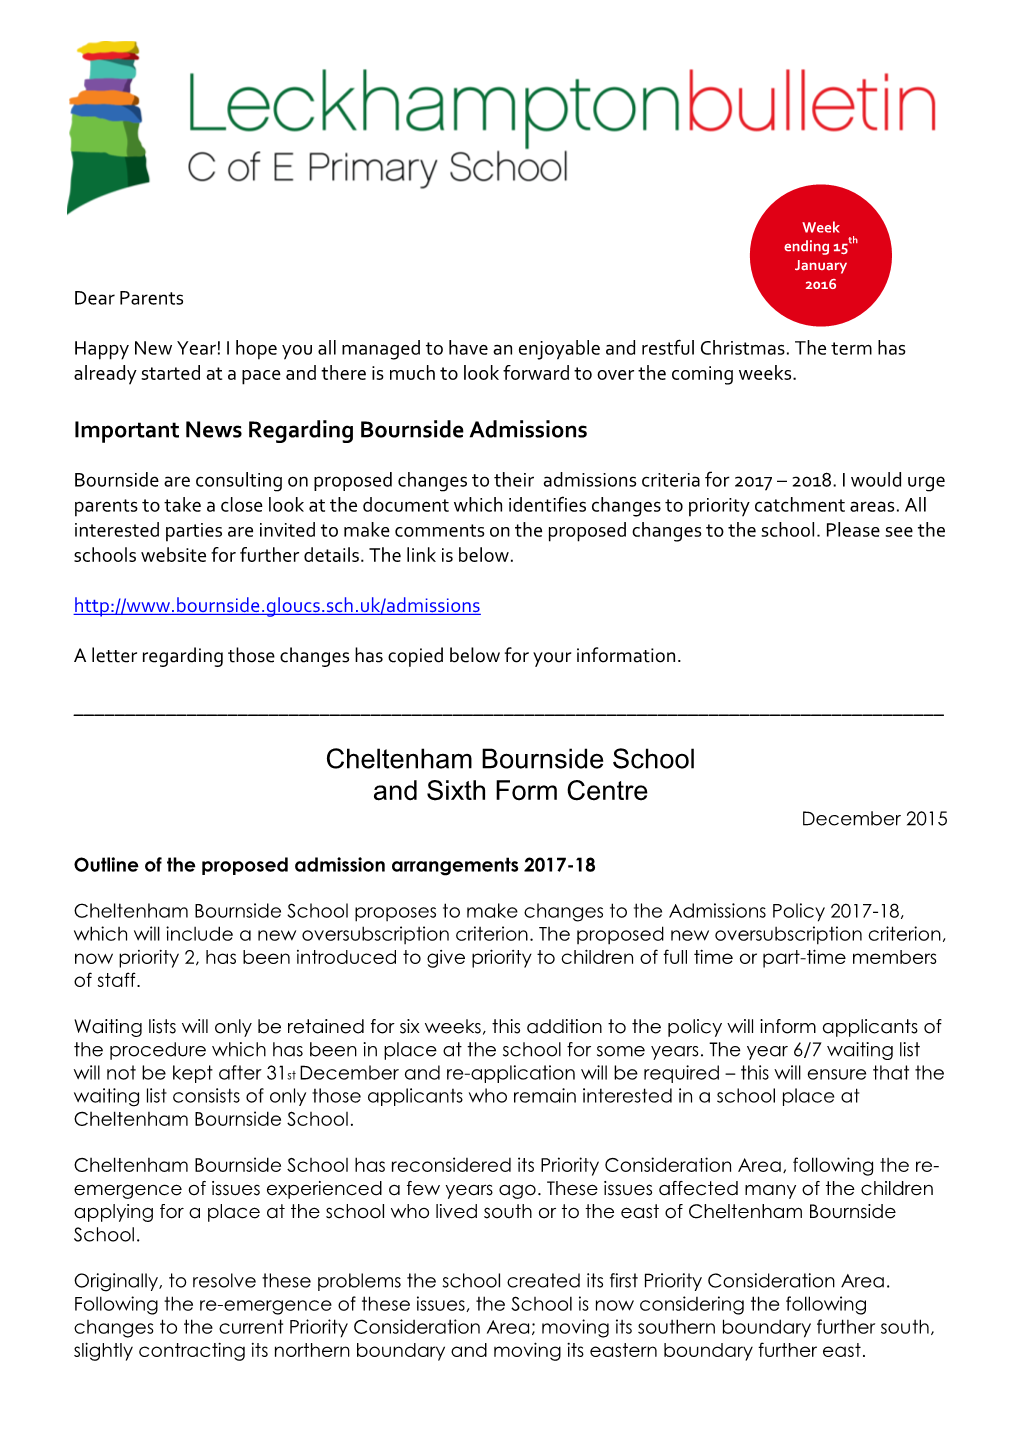 Cheltenham Bournside School and Sixth Form Centre December 2015